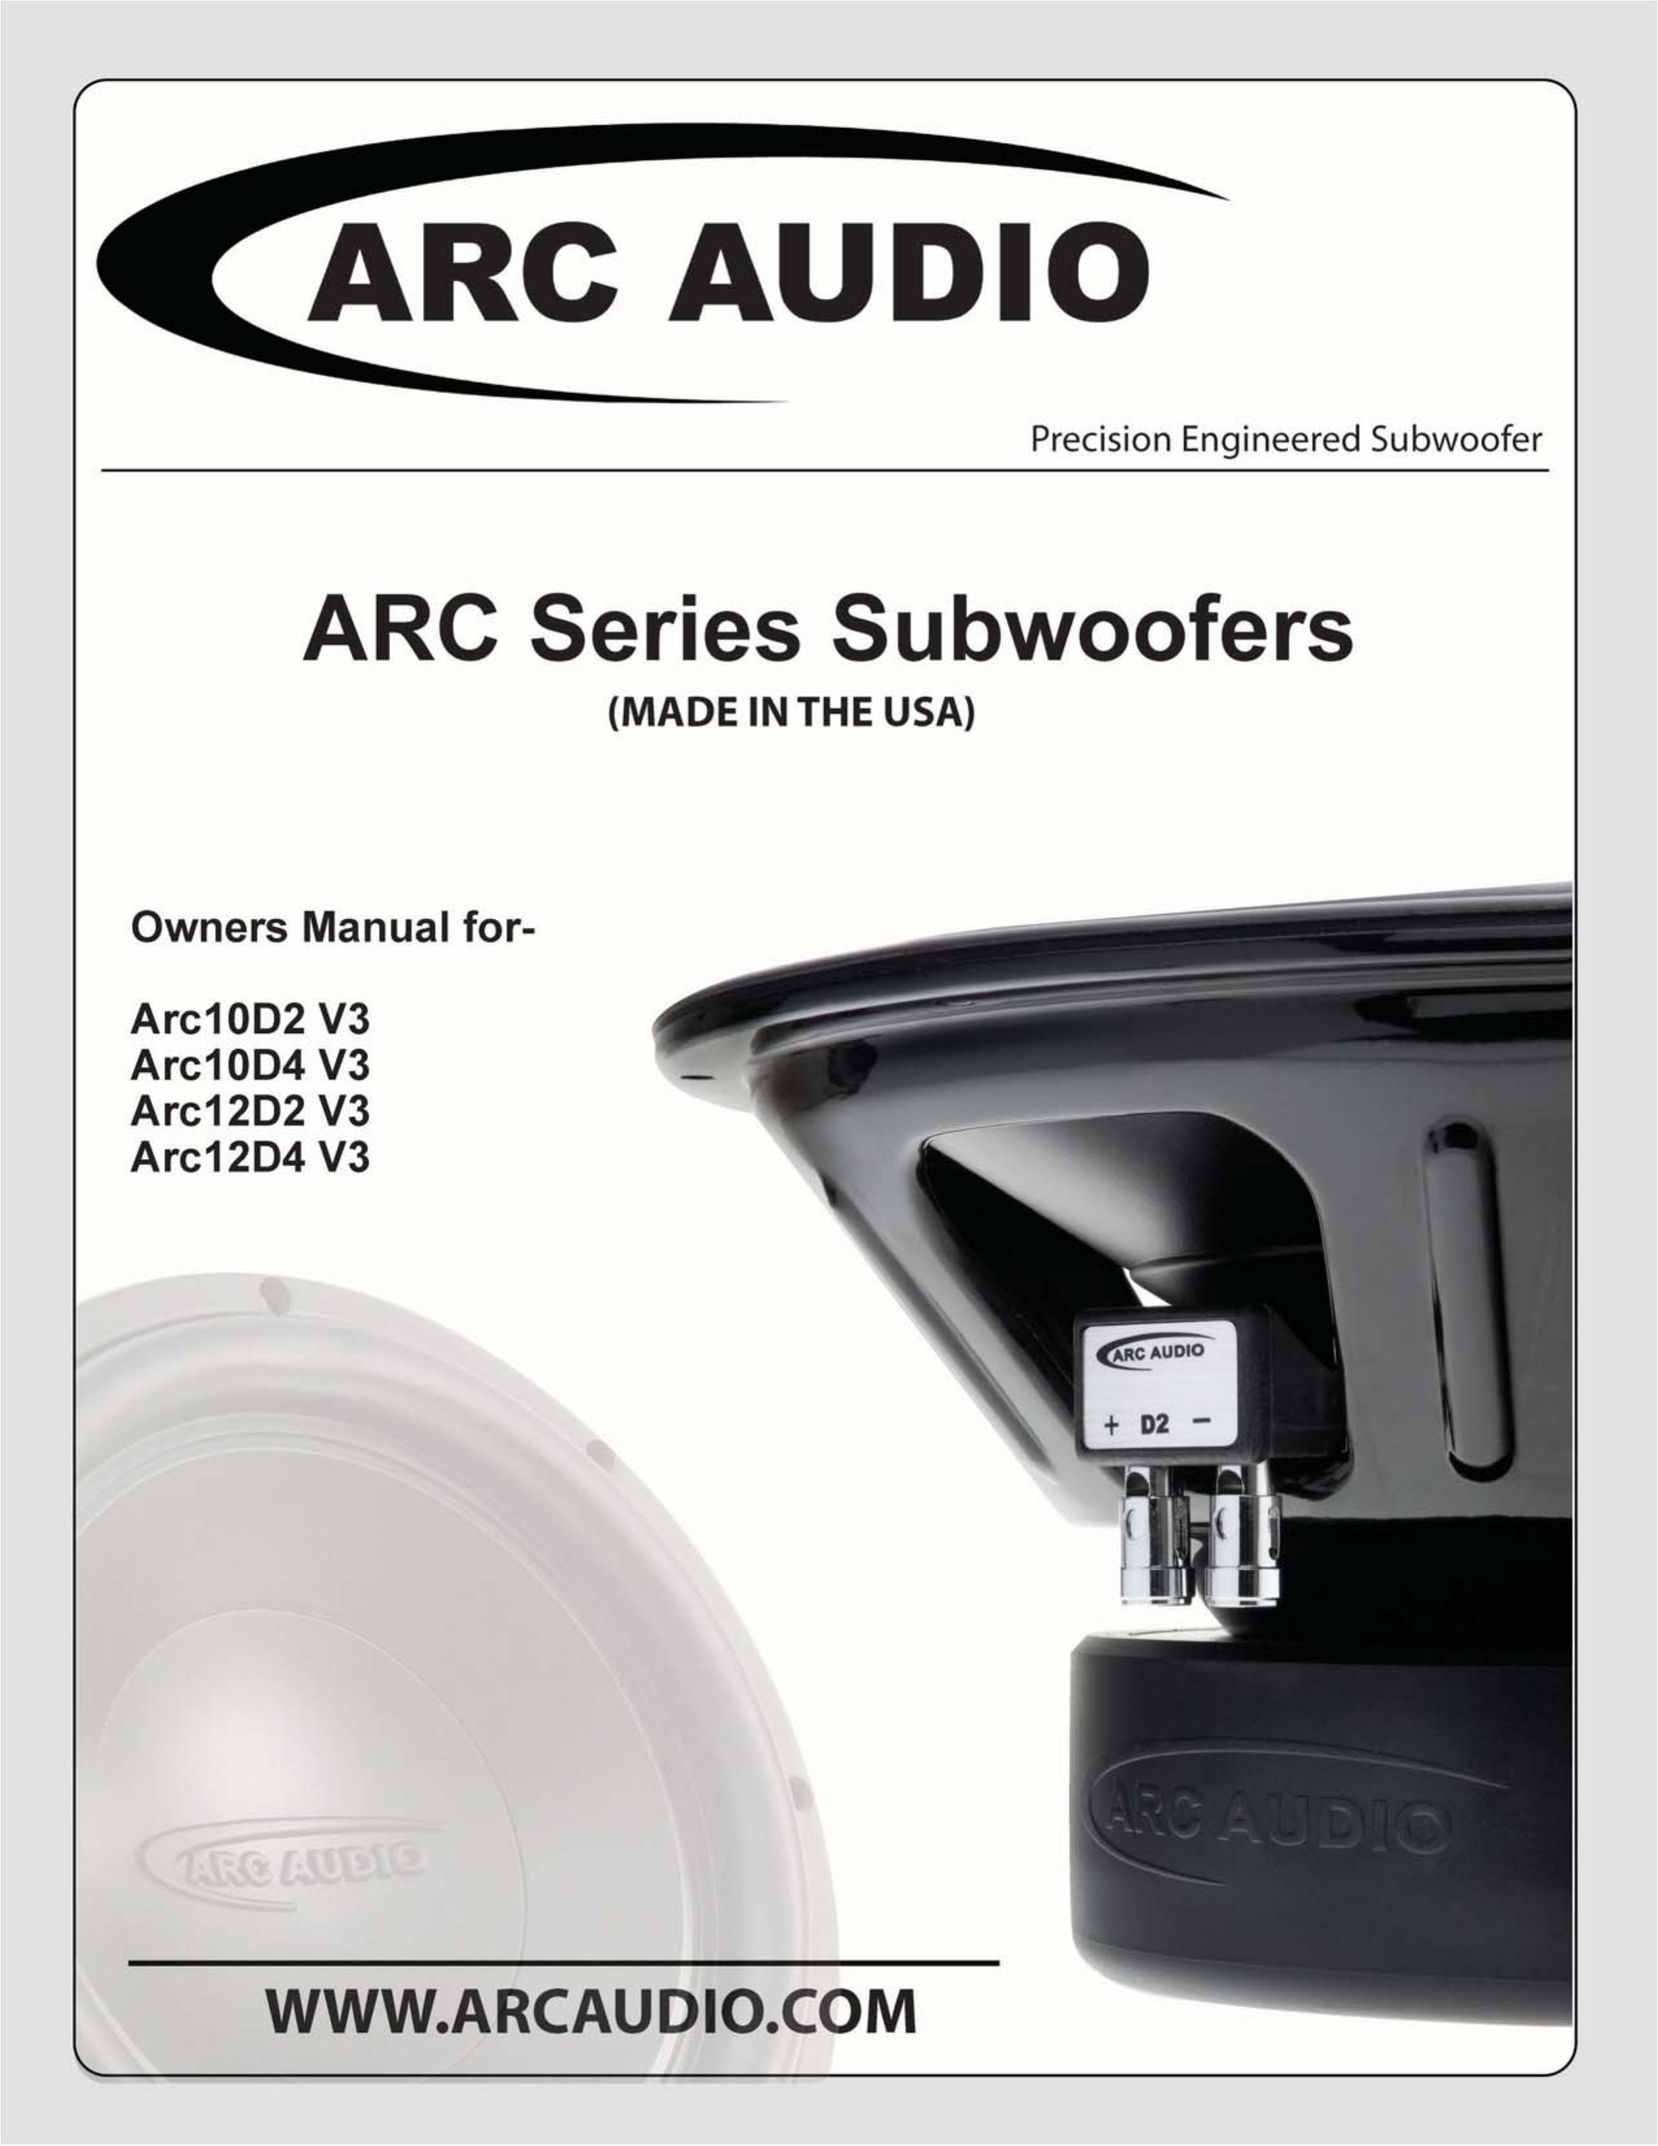 ARC Audio ARC10D4 V3 Speaker User Manual